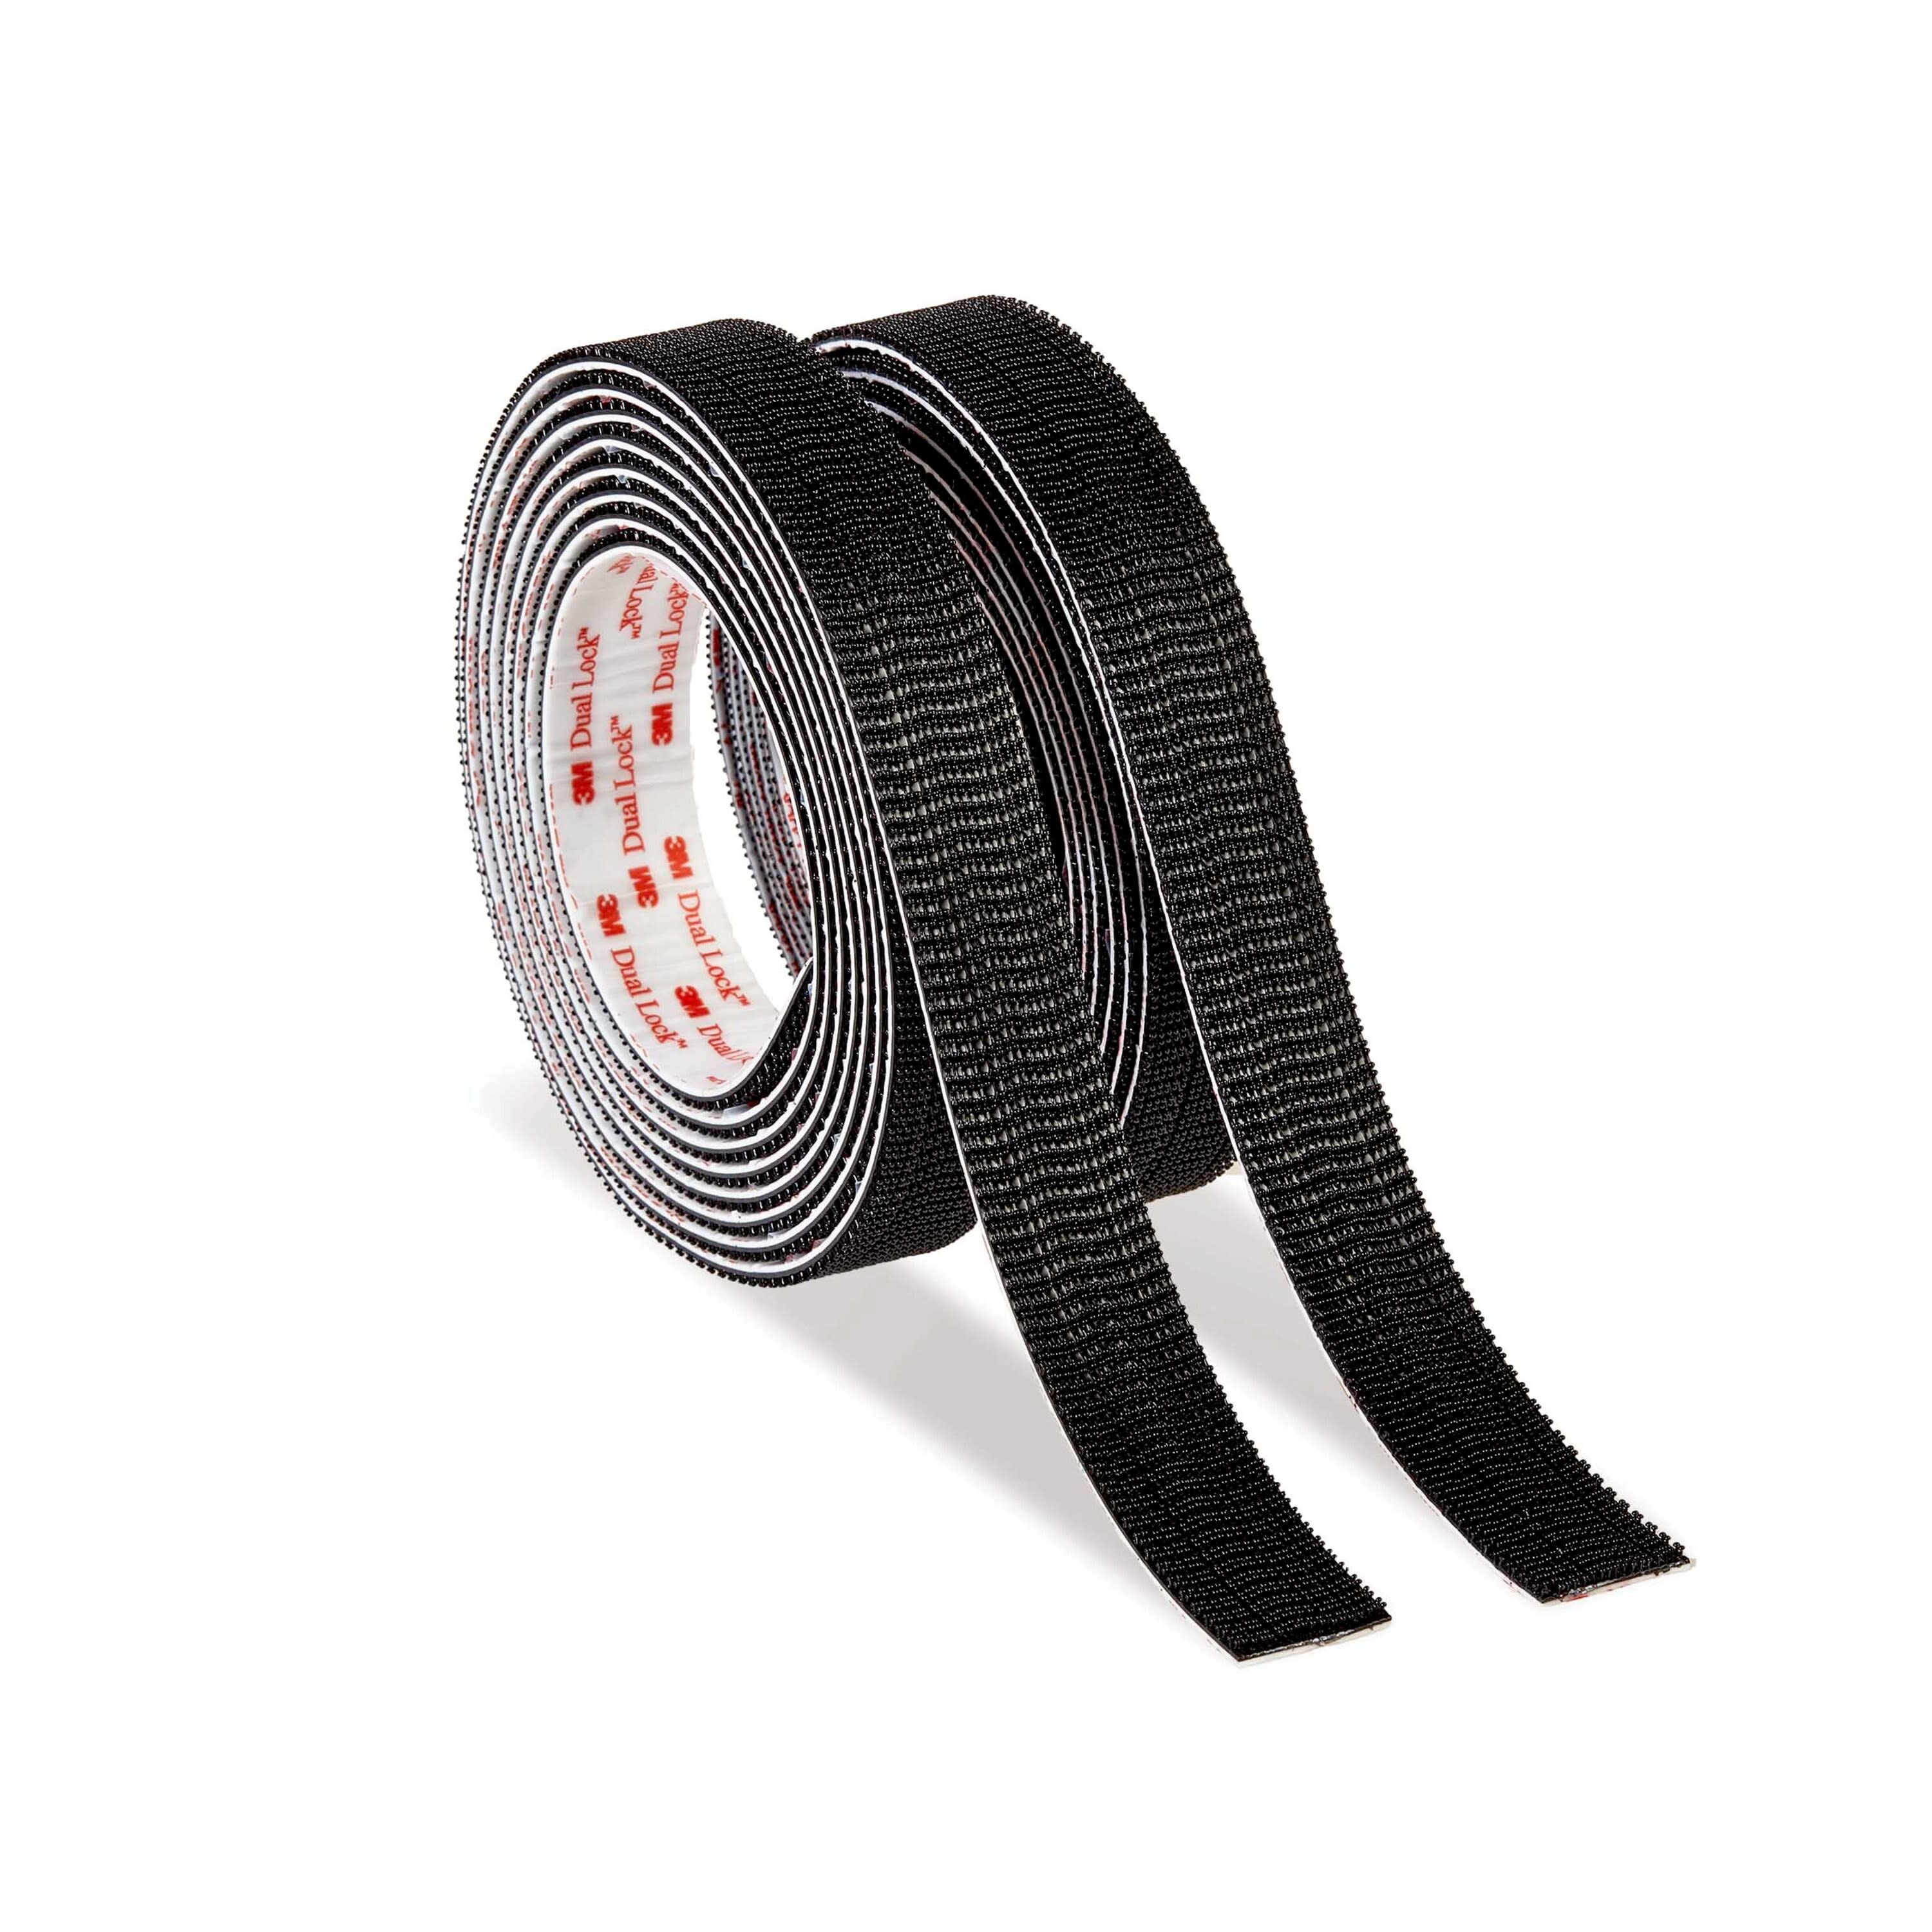 Velcro® Industrial Strength Heavy Duty Black Fasteners, 2 ct - QFC